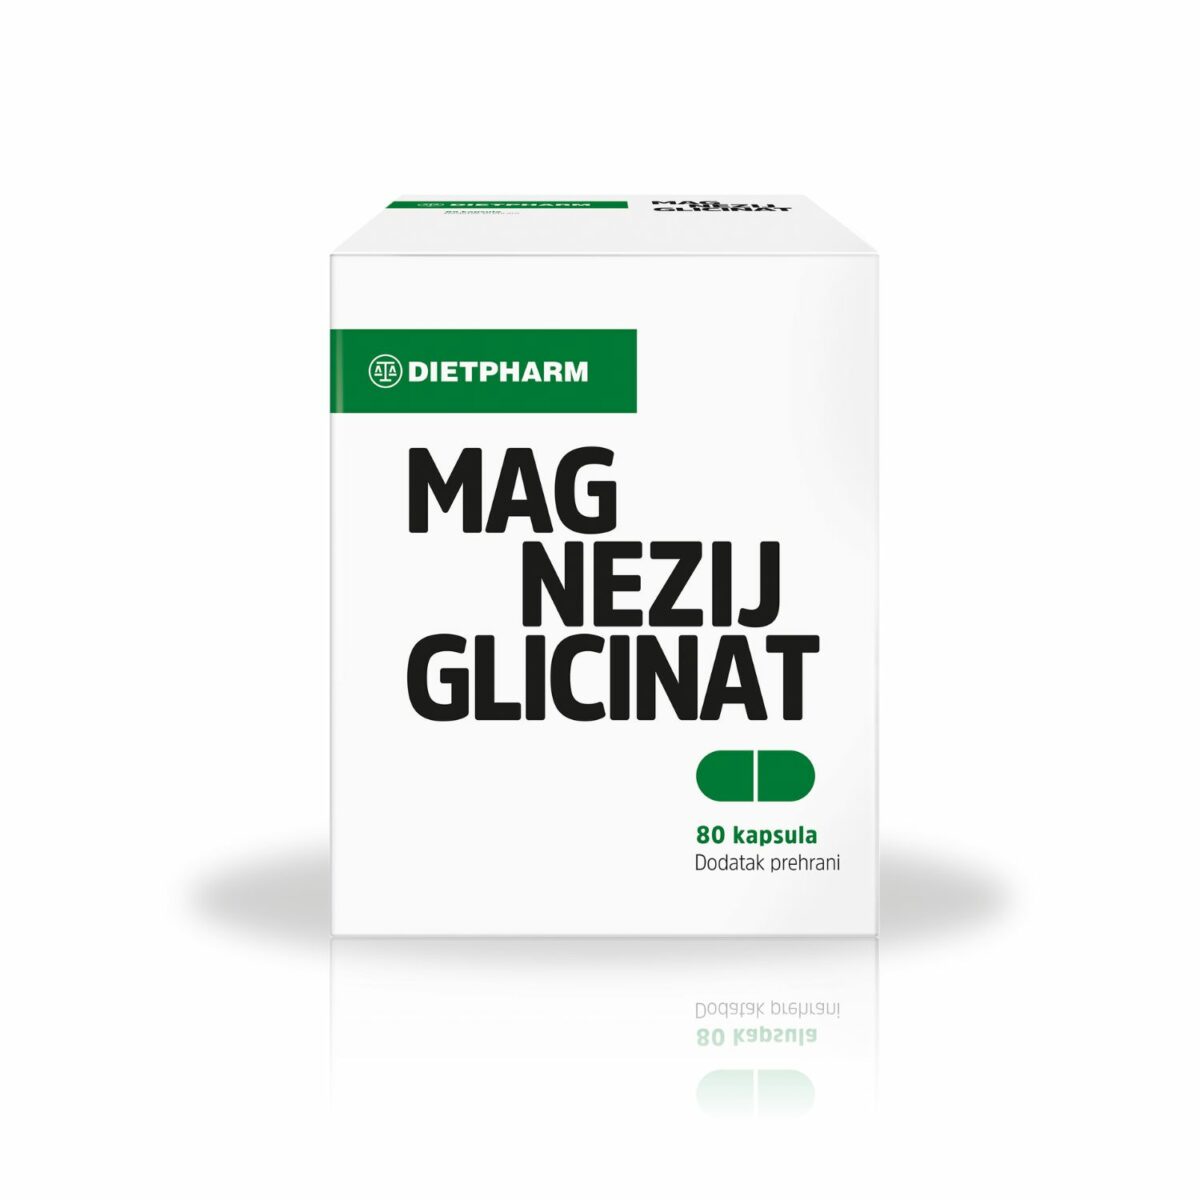 Dietpharm Magnezij glicinat 80 kapsula